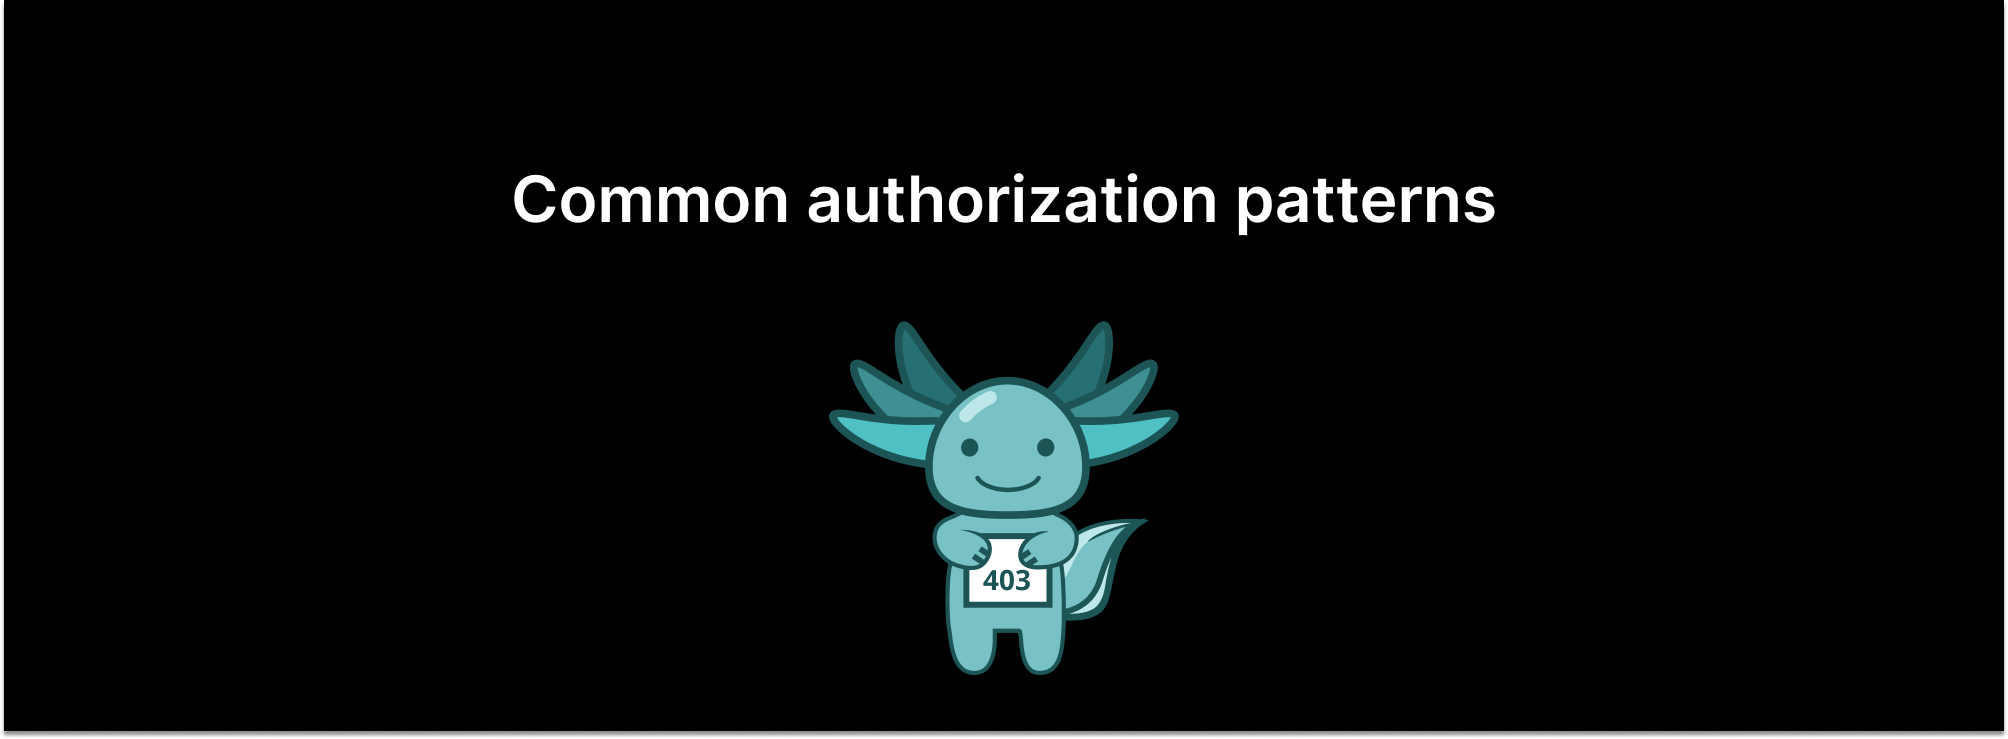 5 common authorization patterns